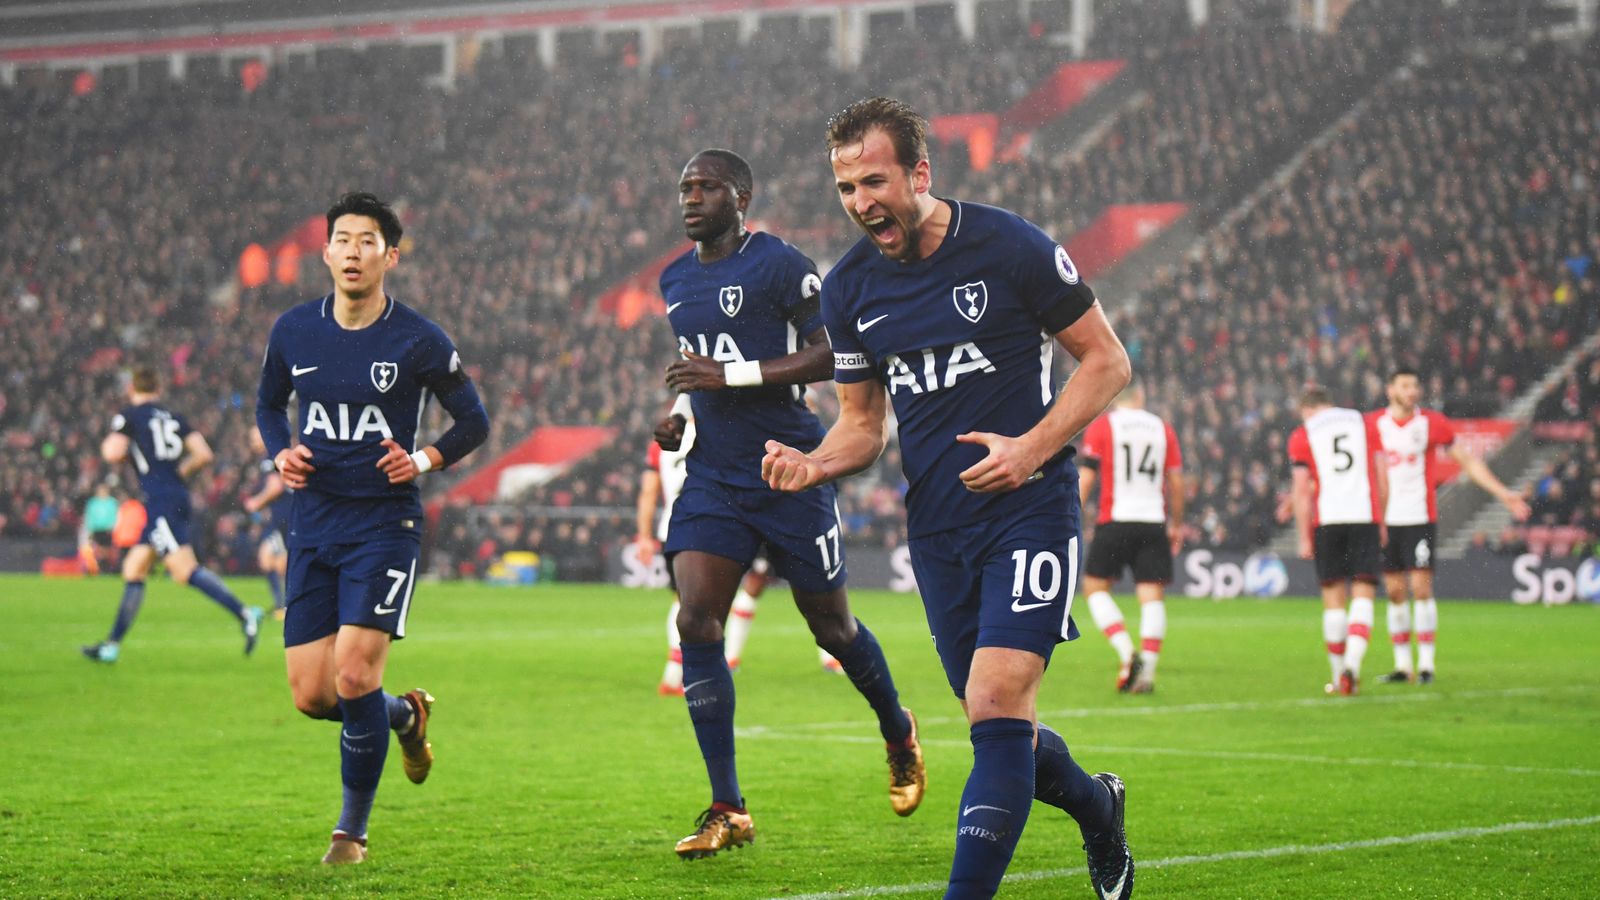 So'ton 1 - 1 Tottenham - Match Report & Highlights